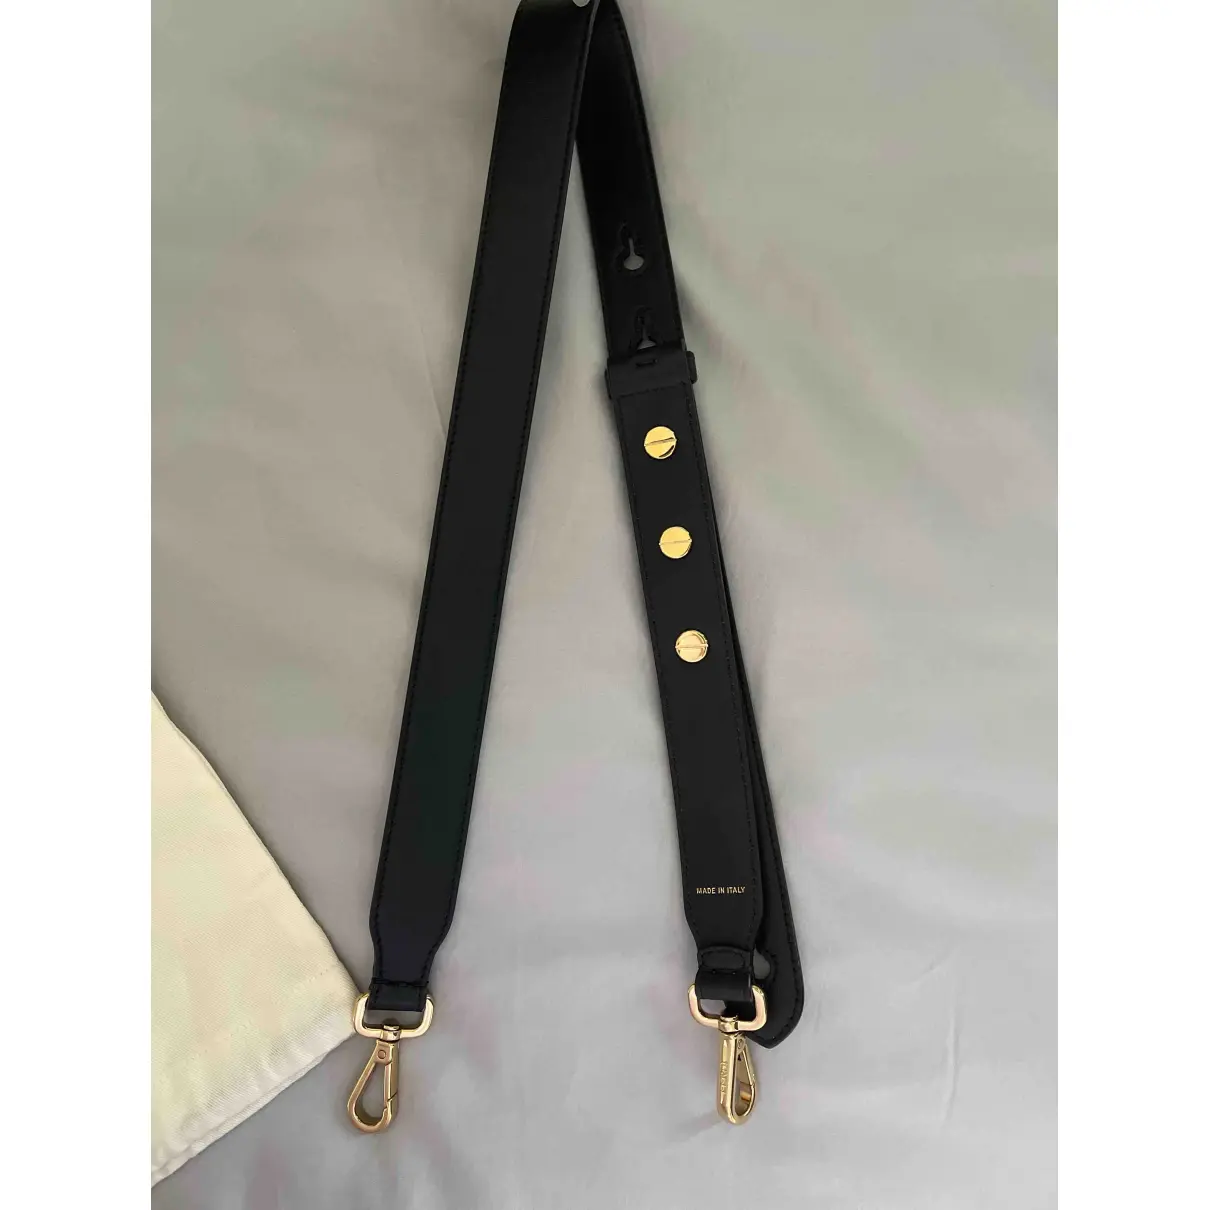 Buy Fendi Leather purse online